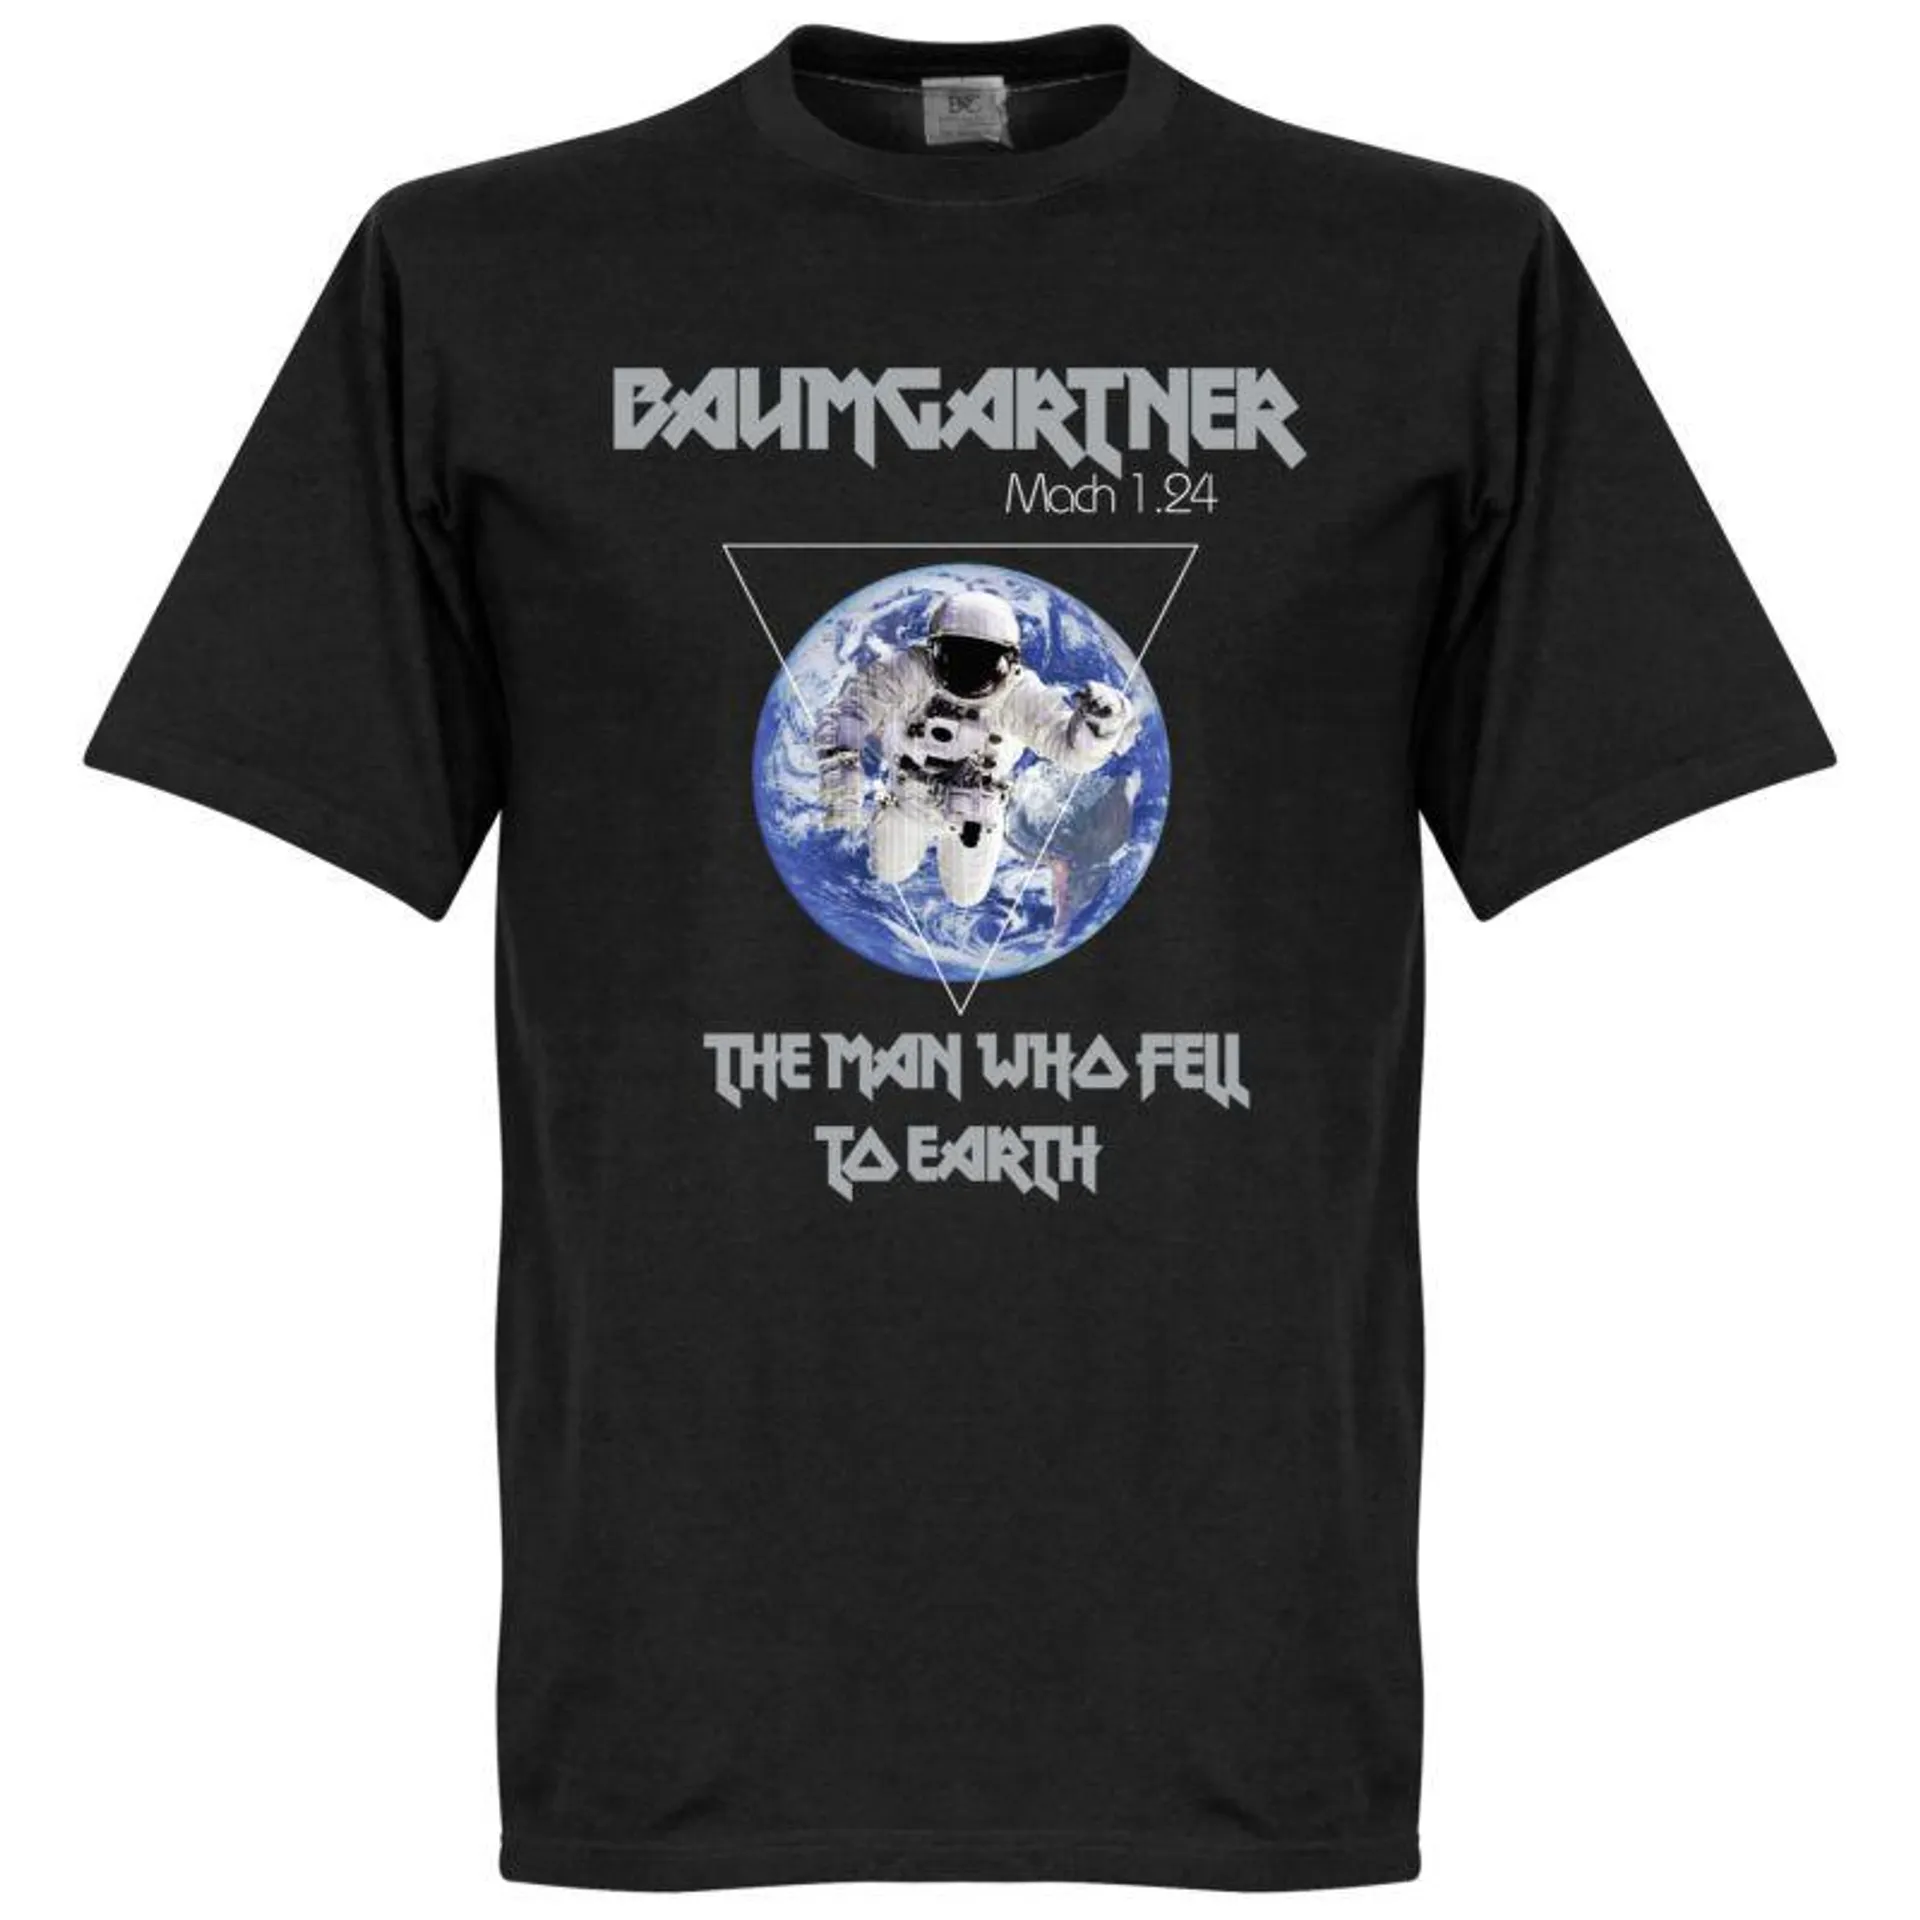 Baumgartner: The Man Who Fell To Earth T-shirt